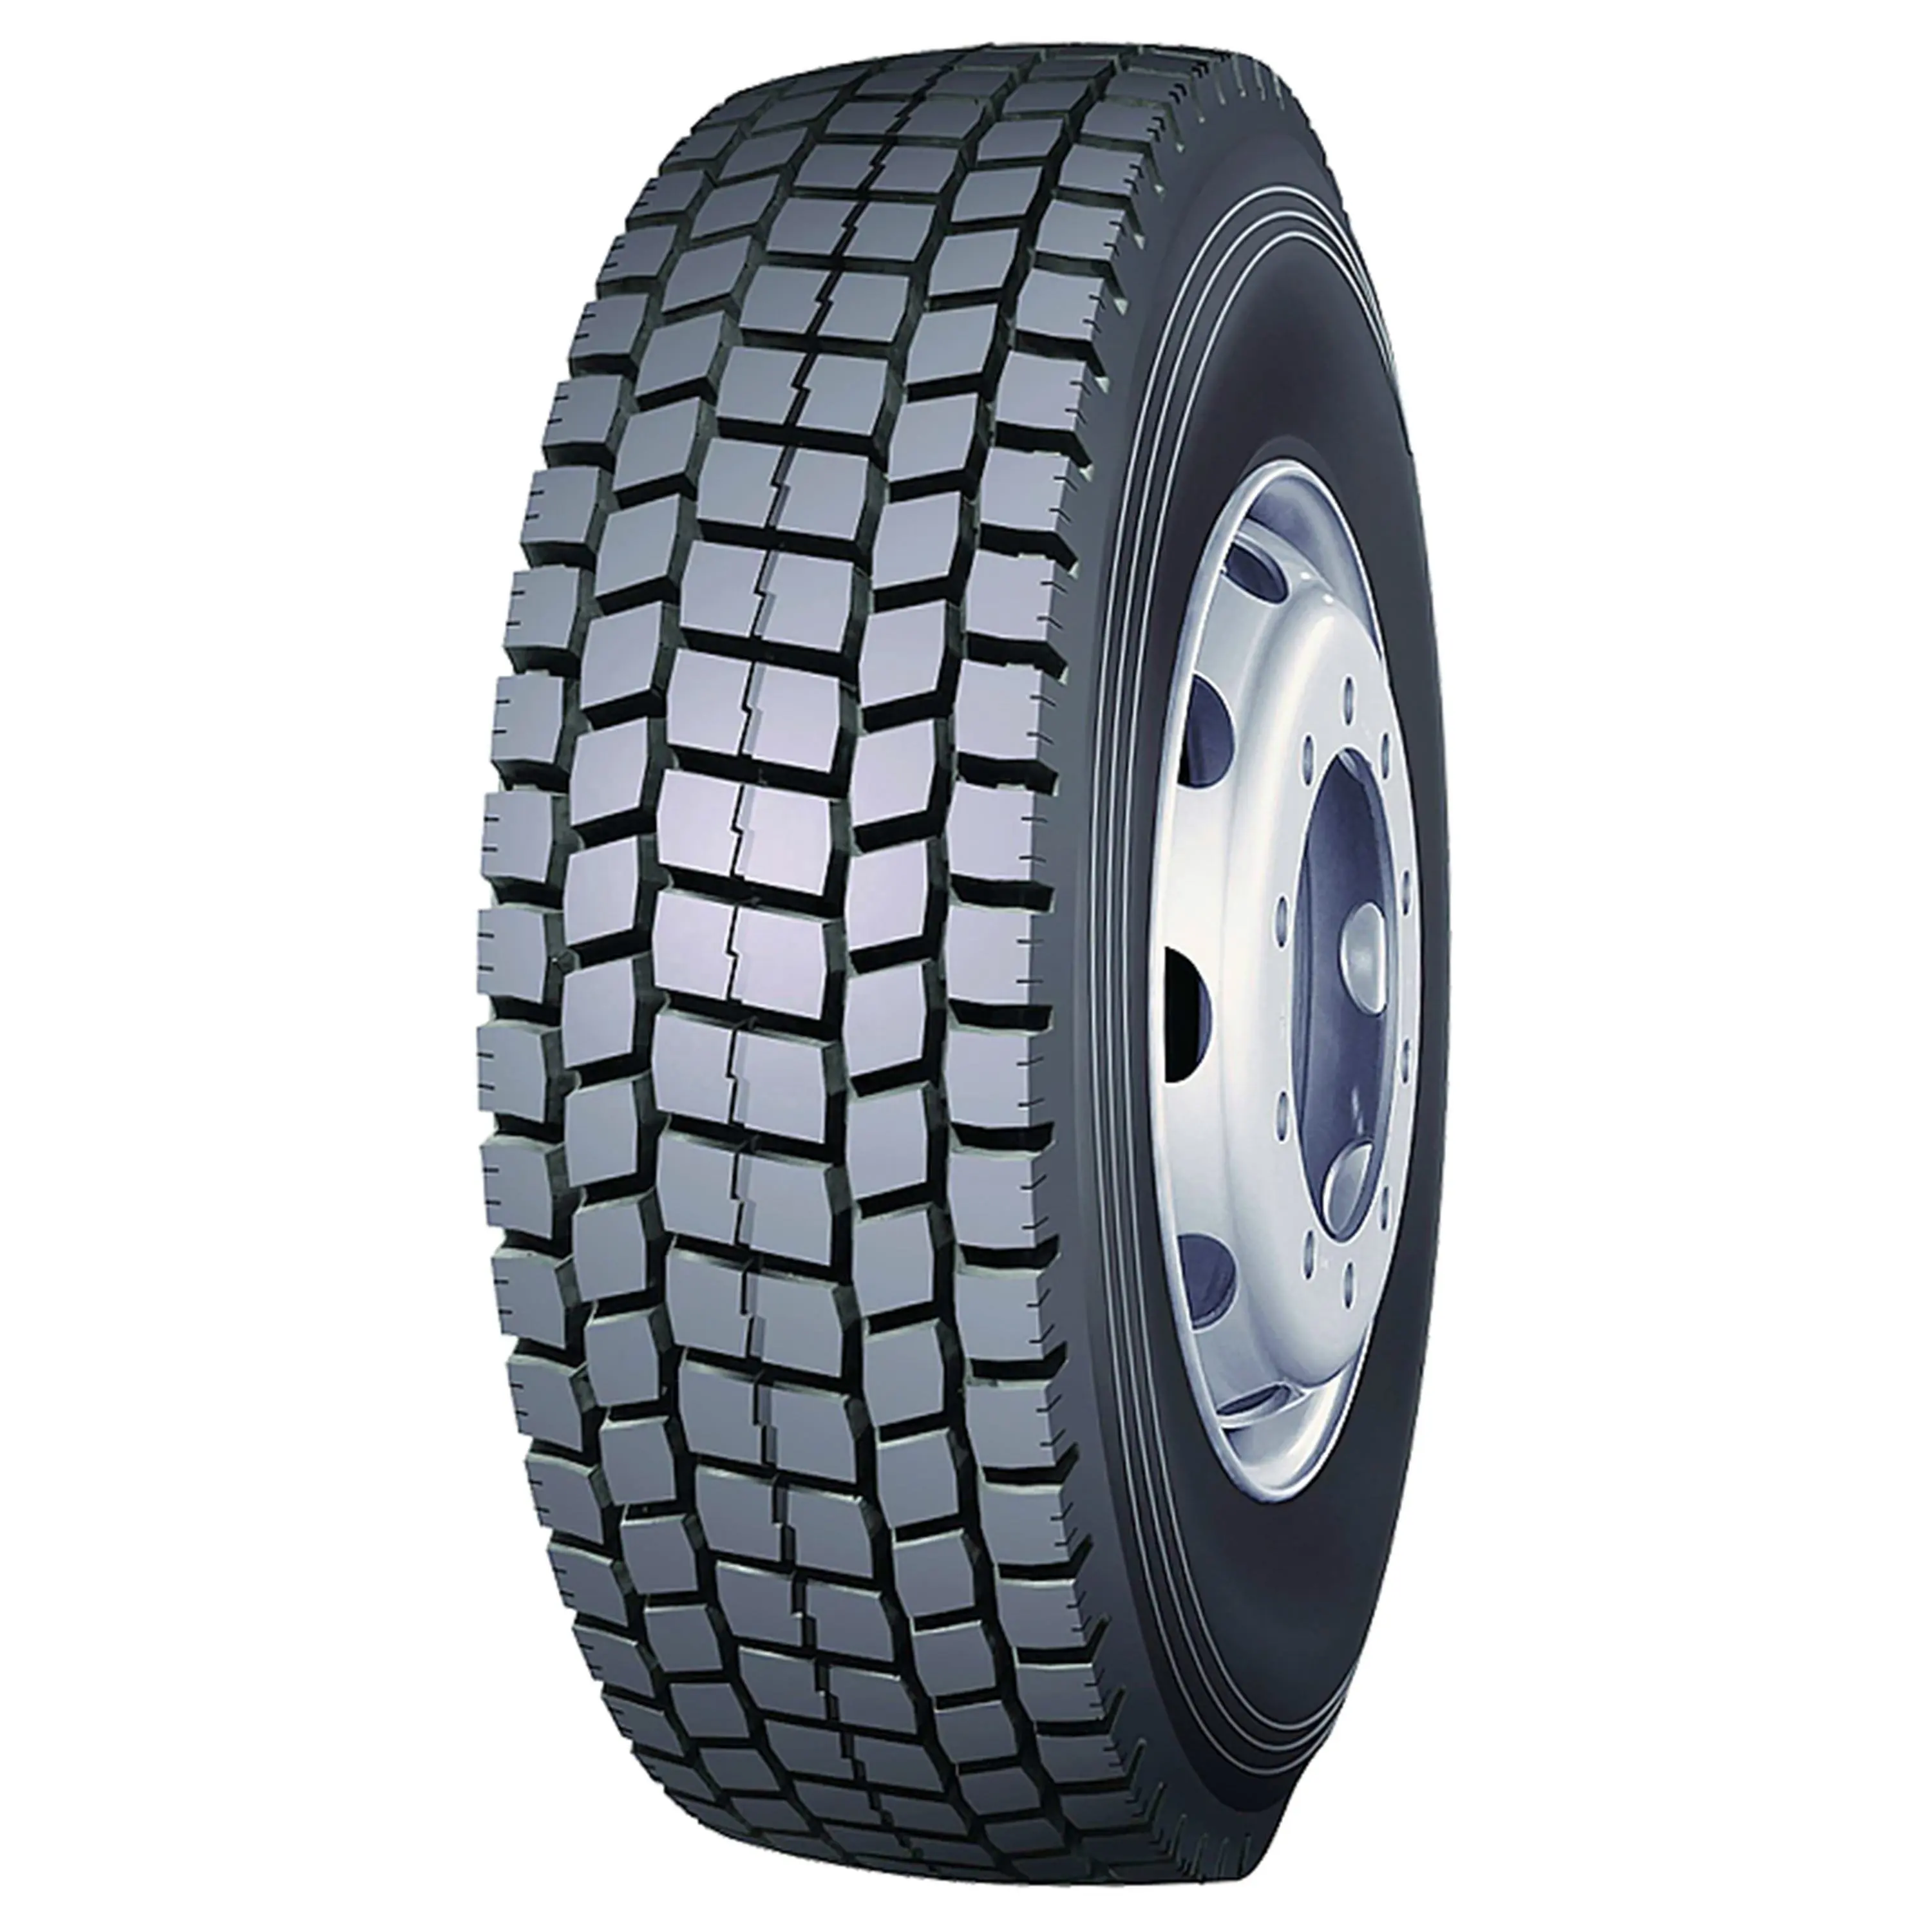 Radial-LKW-Reifen erhältlich 11 r22.5 295/75 r22.5 11 r24.5 13 r22.5